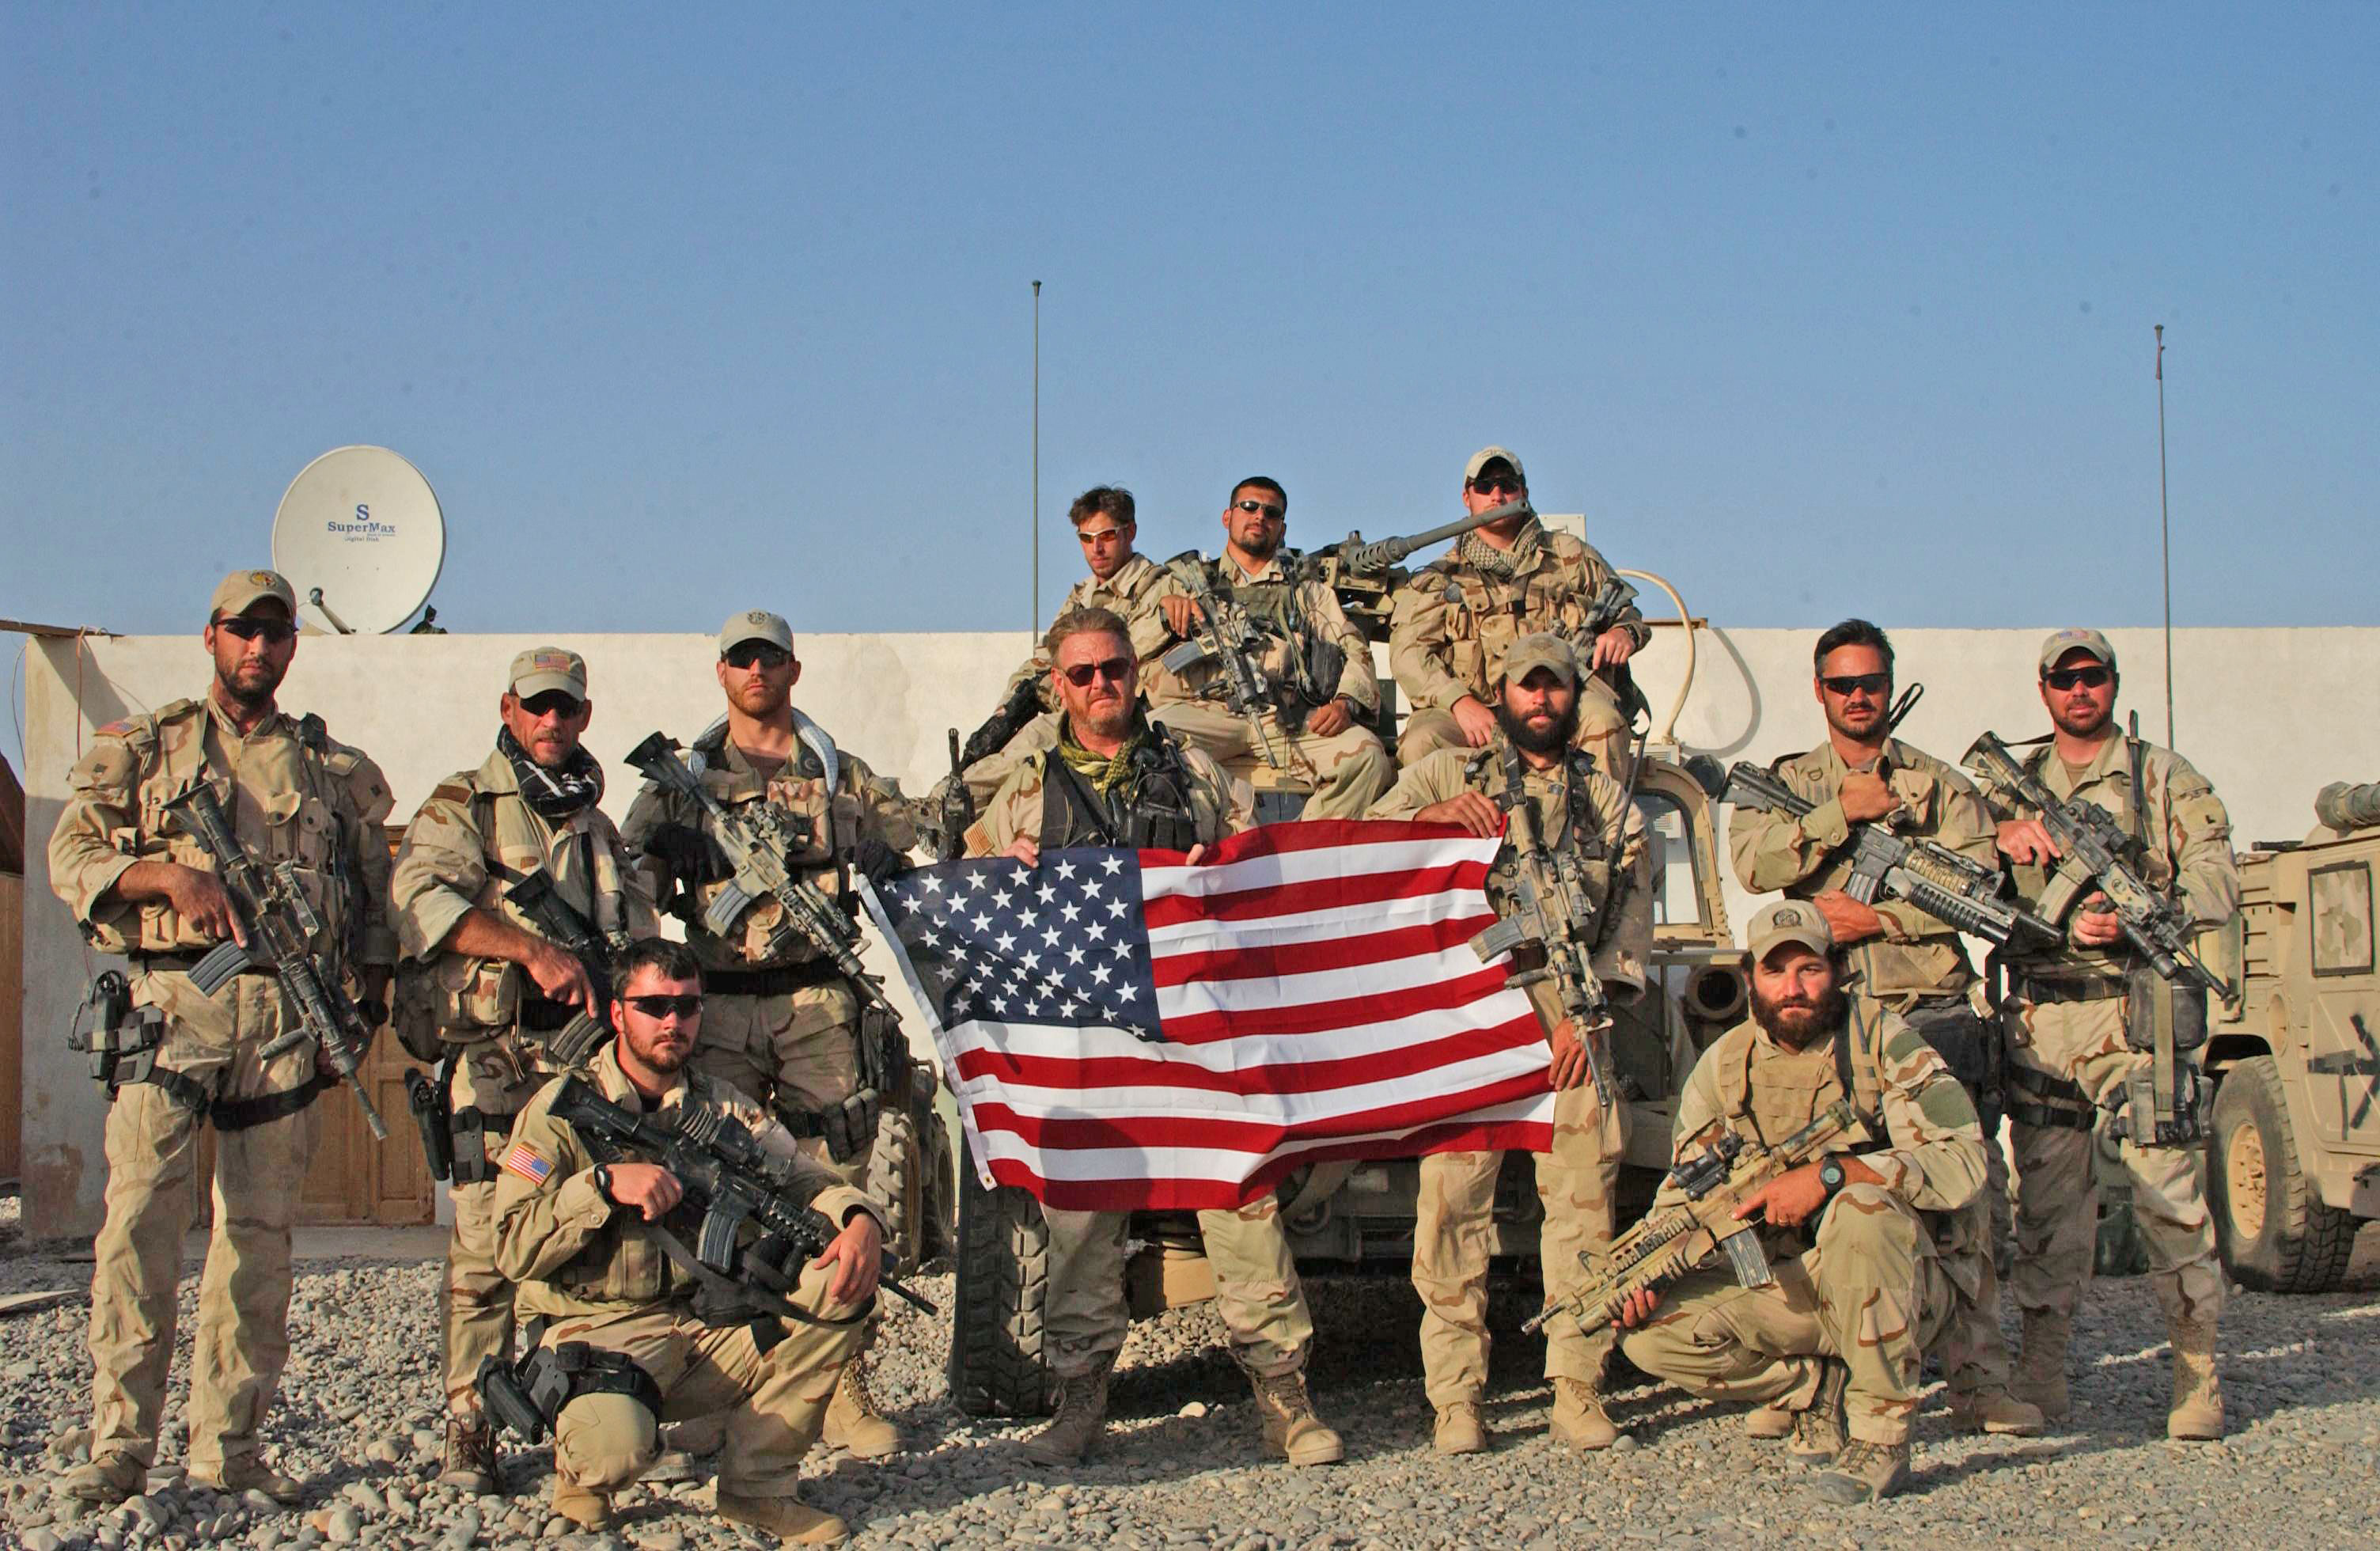 солдаты, флаги, США - обои на рабочий стол